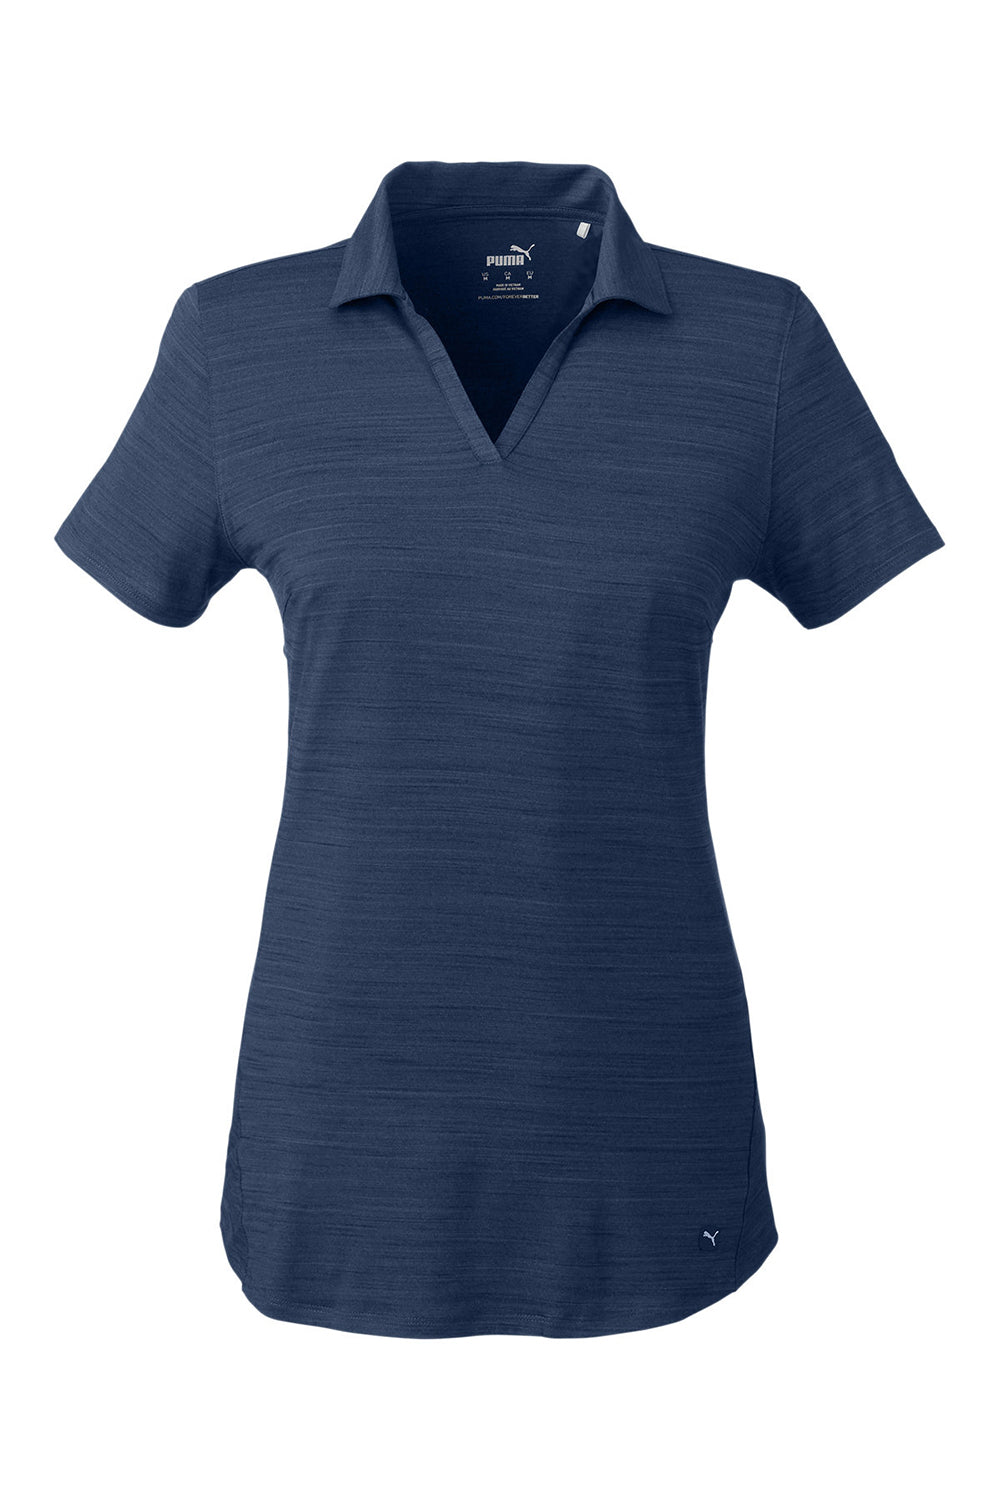 Puma 597695 Womens Cloudspun Free Short Sleeve Polo Shirt Heather Navy Blue Flat Front